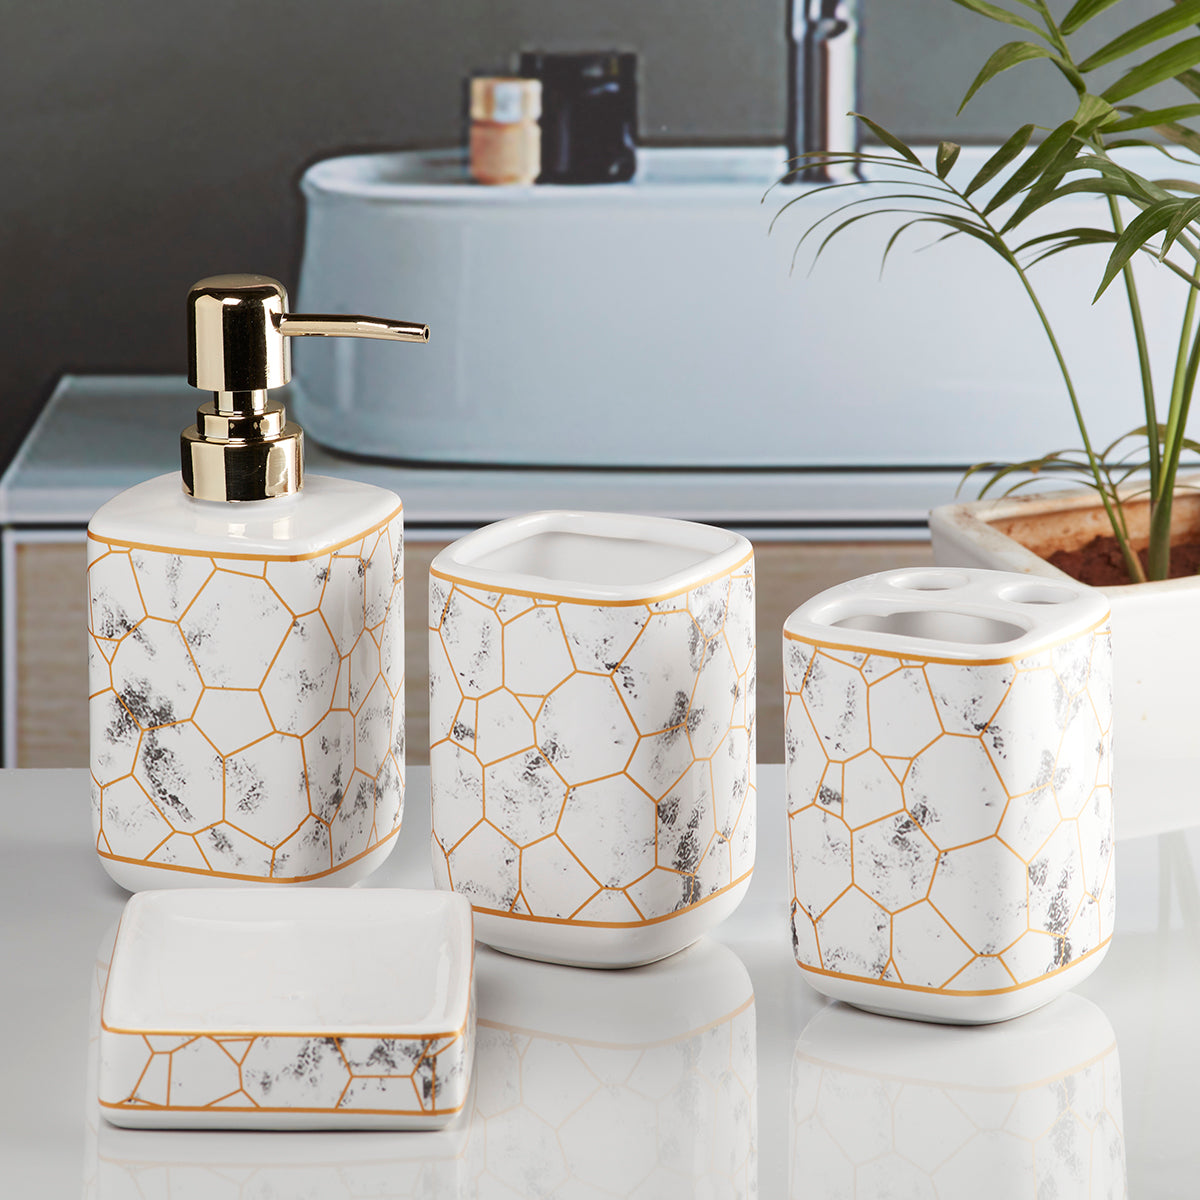 Ceramic Bathroom Accessories Set of 4 Bath Set with Soap Dispenser (10089)